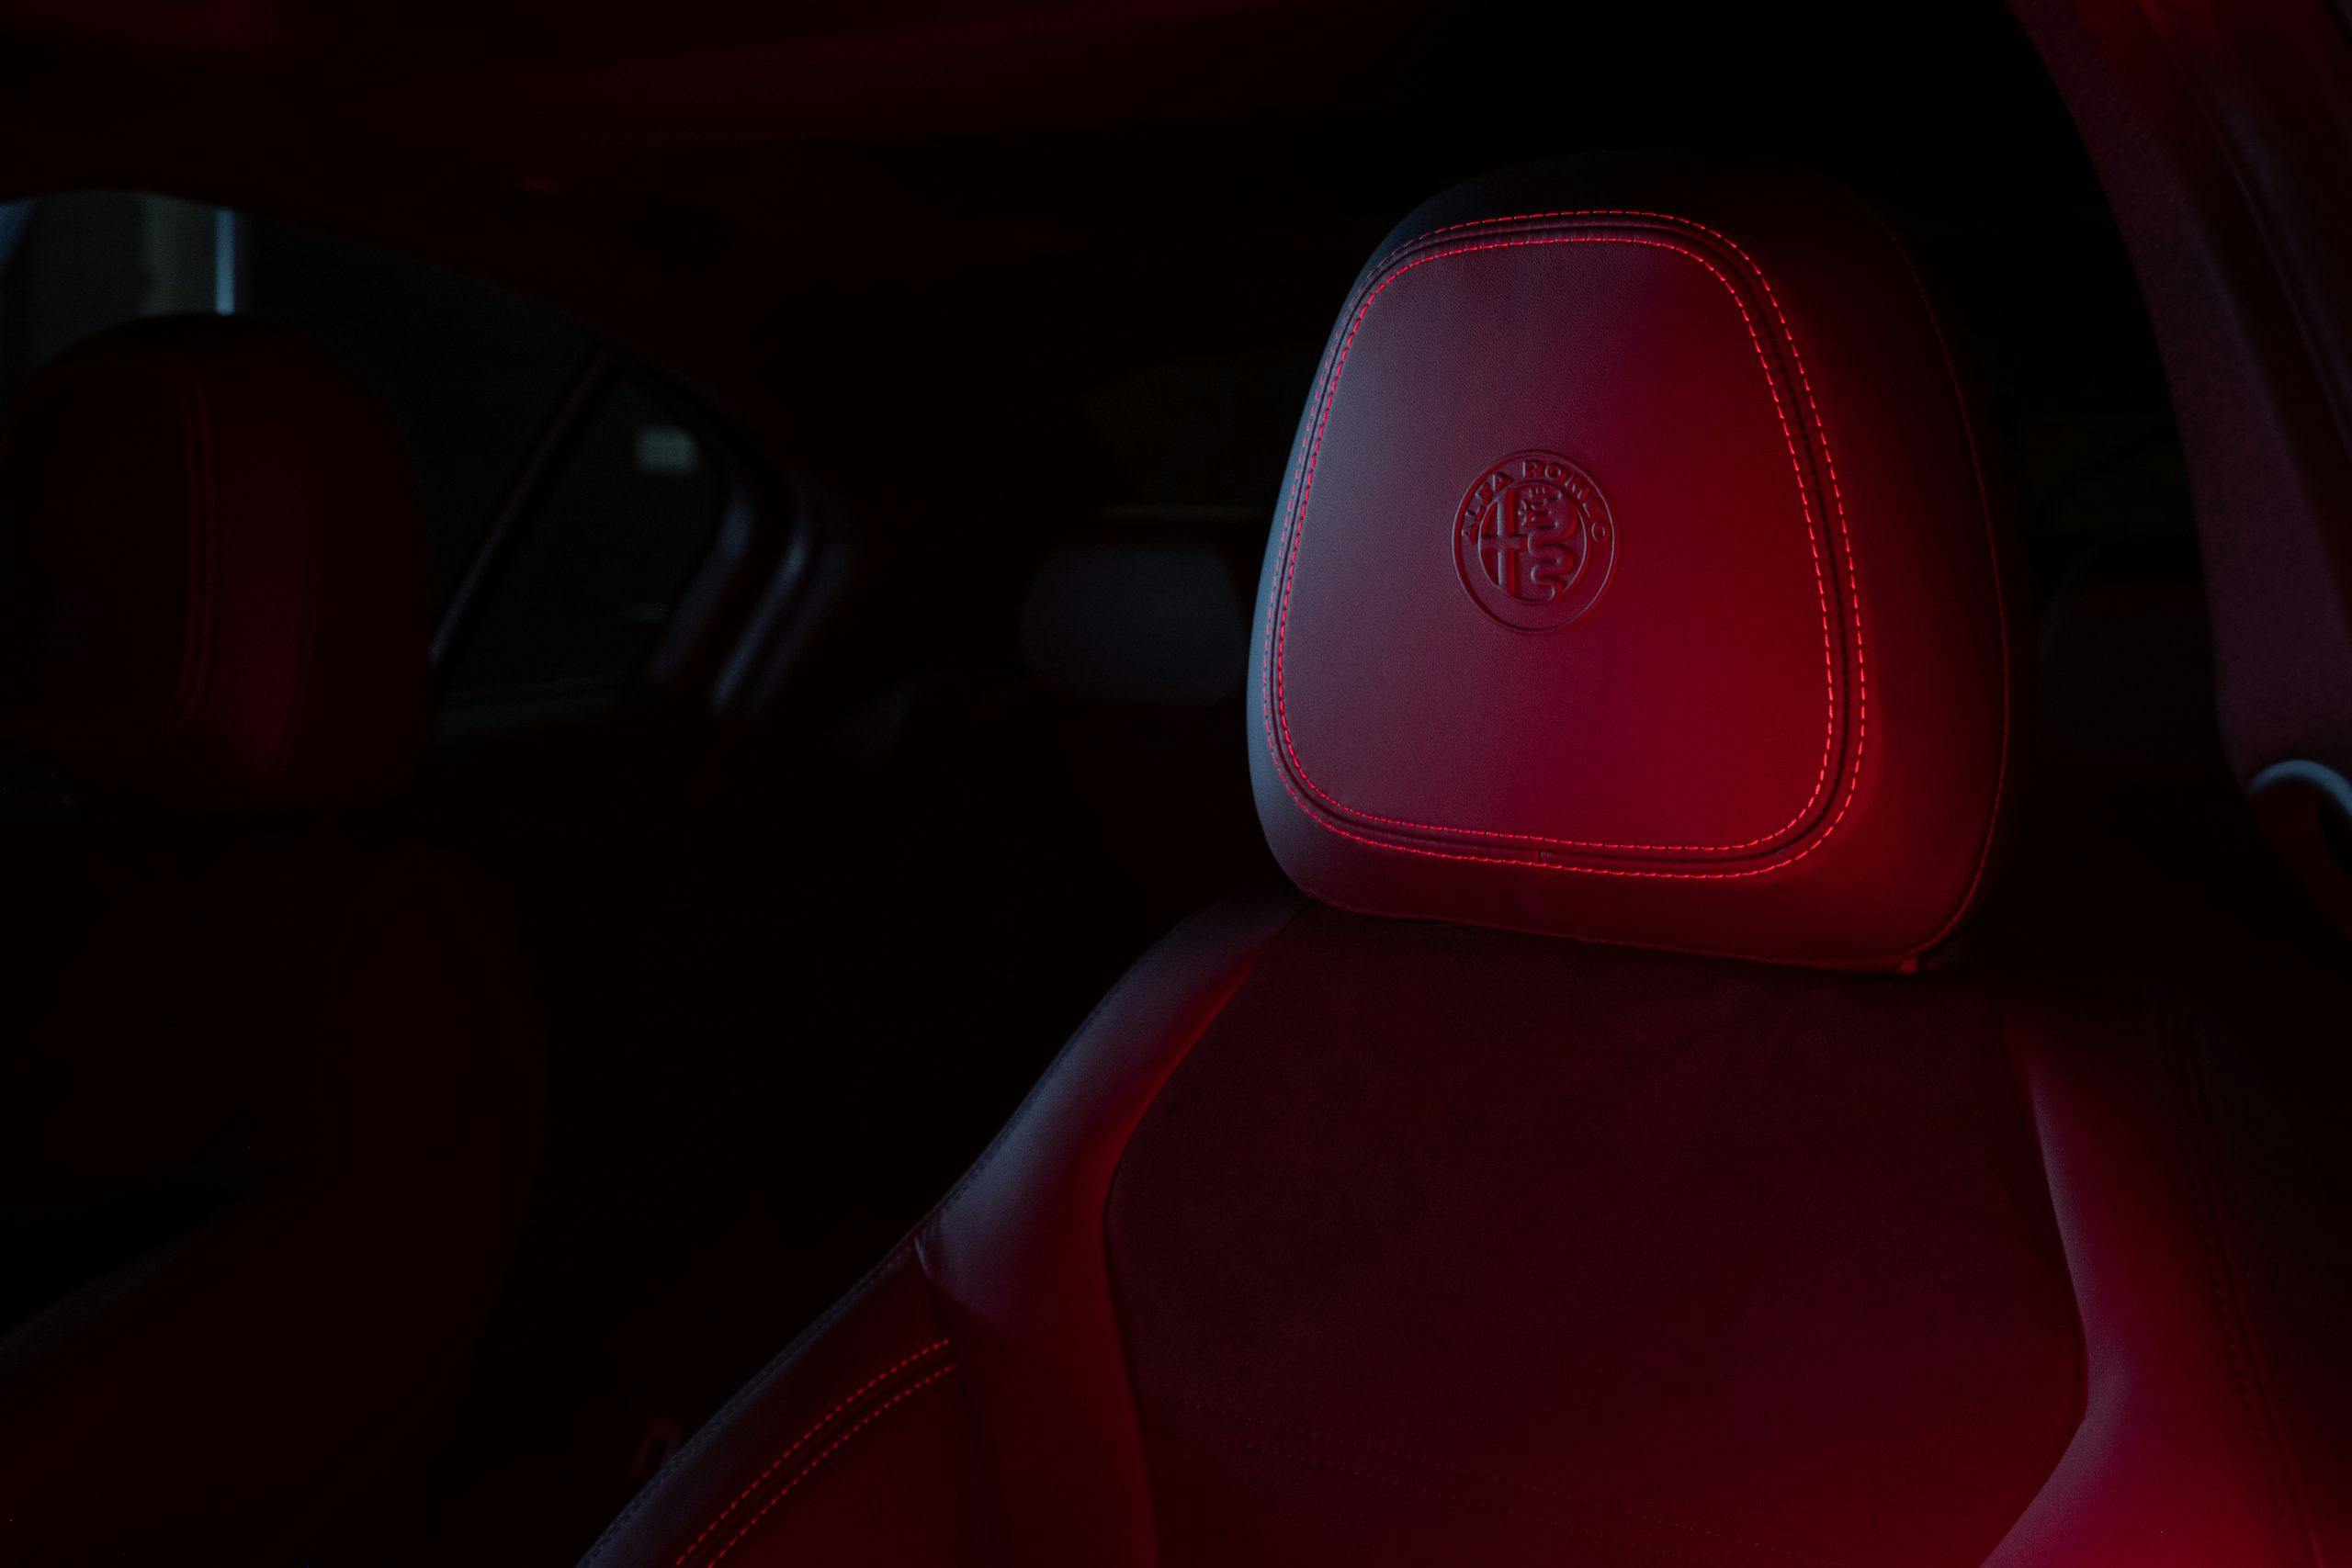 Alfa Romeo Estrema interior head rest